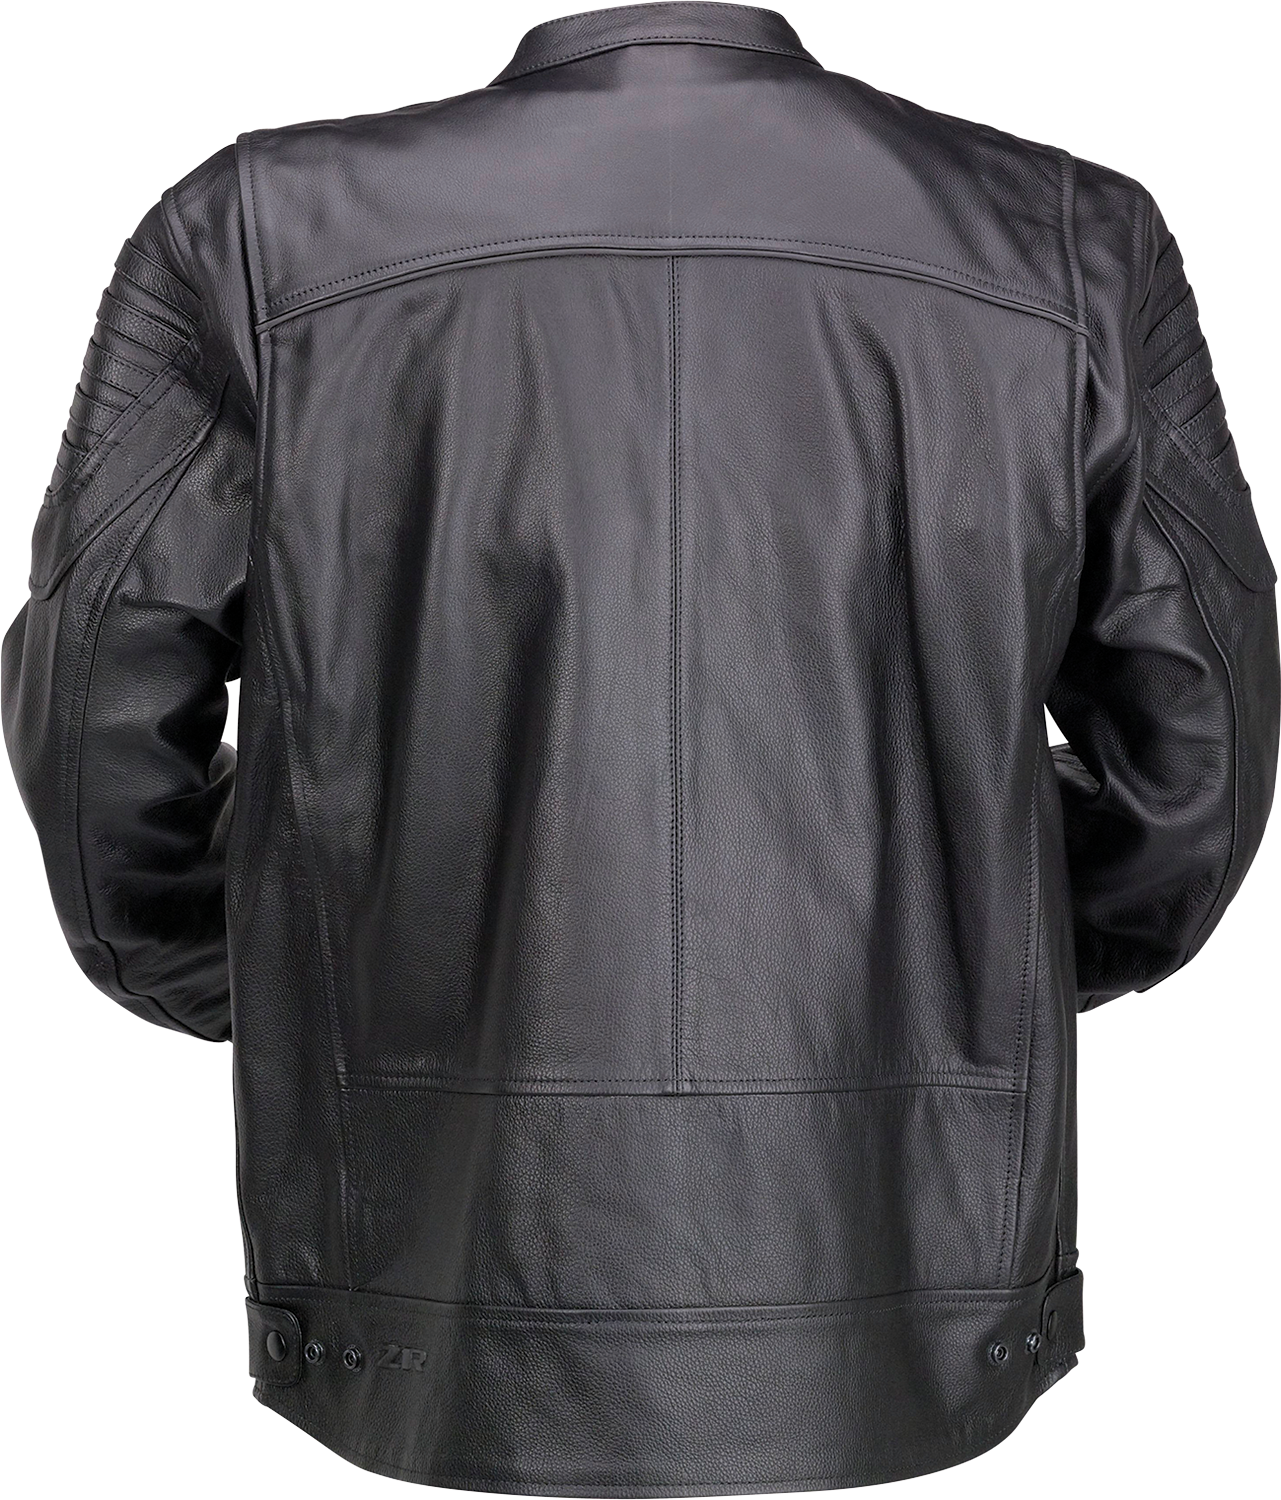 Z1R Widower Leather Jacket - Black - Large 2810-3971